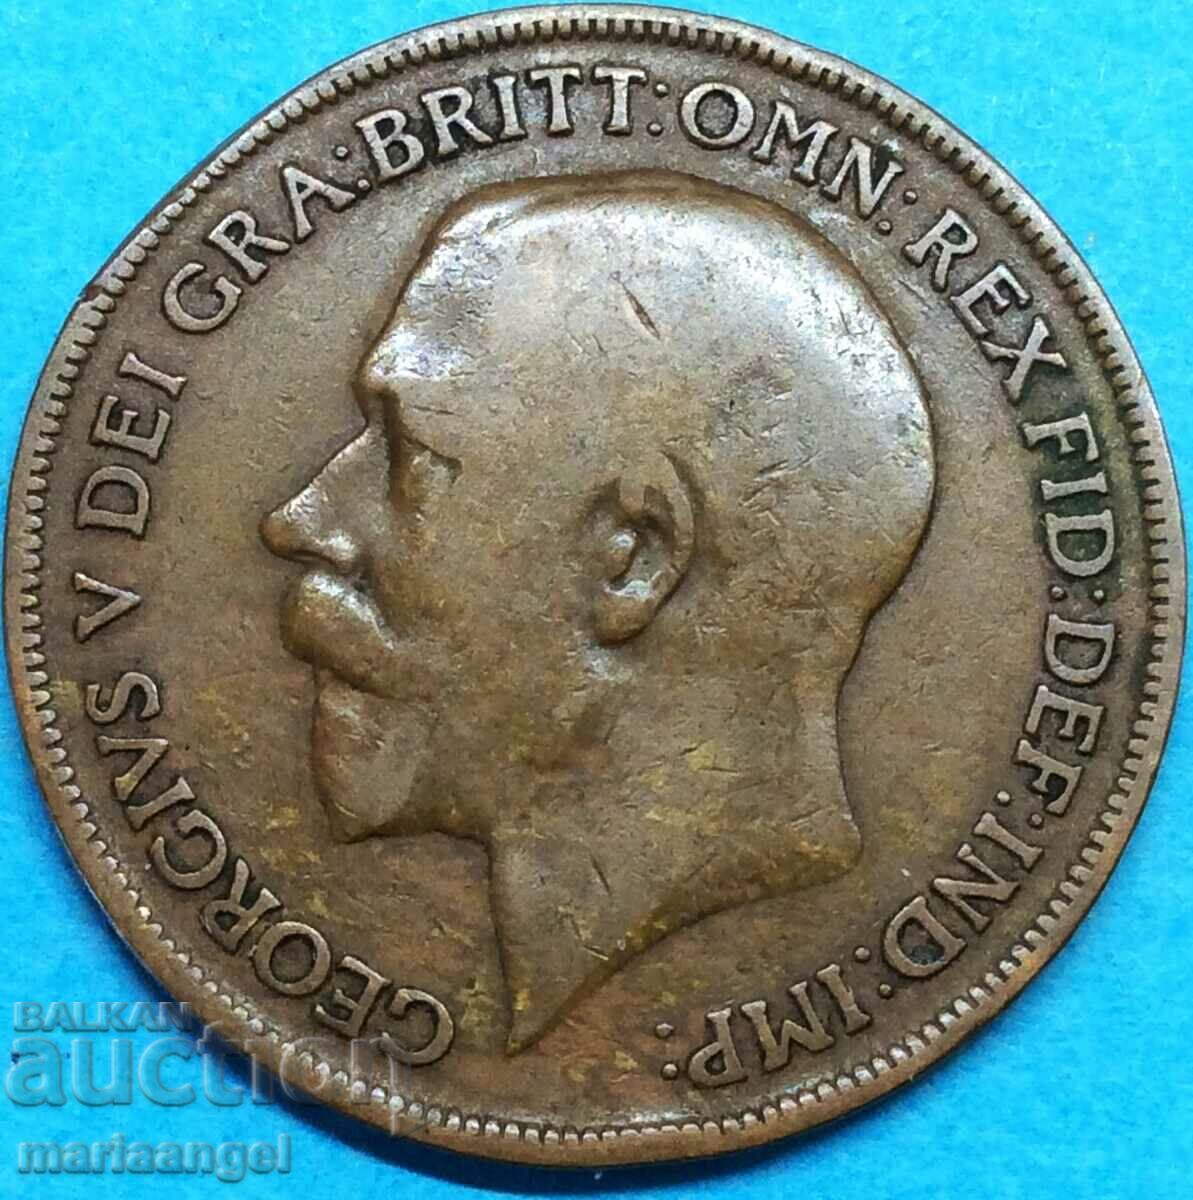 Marea Britanie 1 penny 1920 30mm bronz